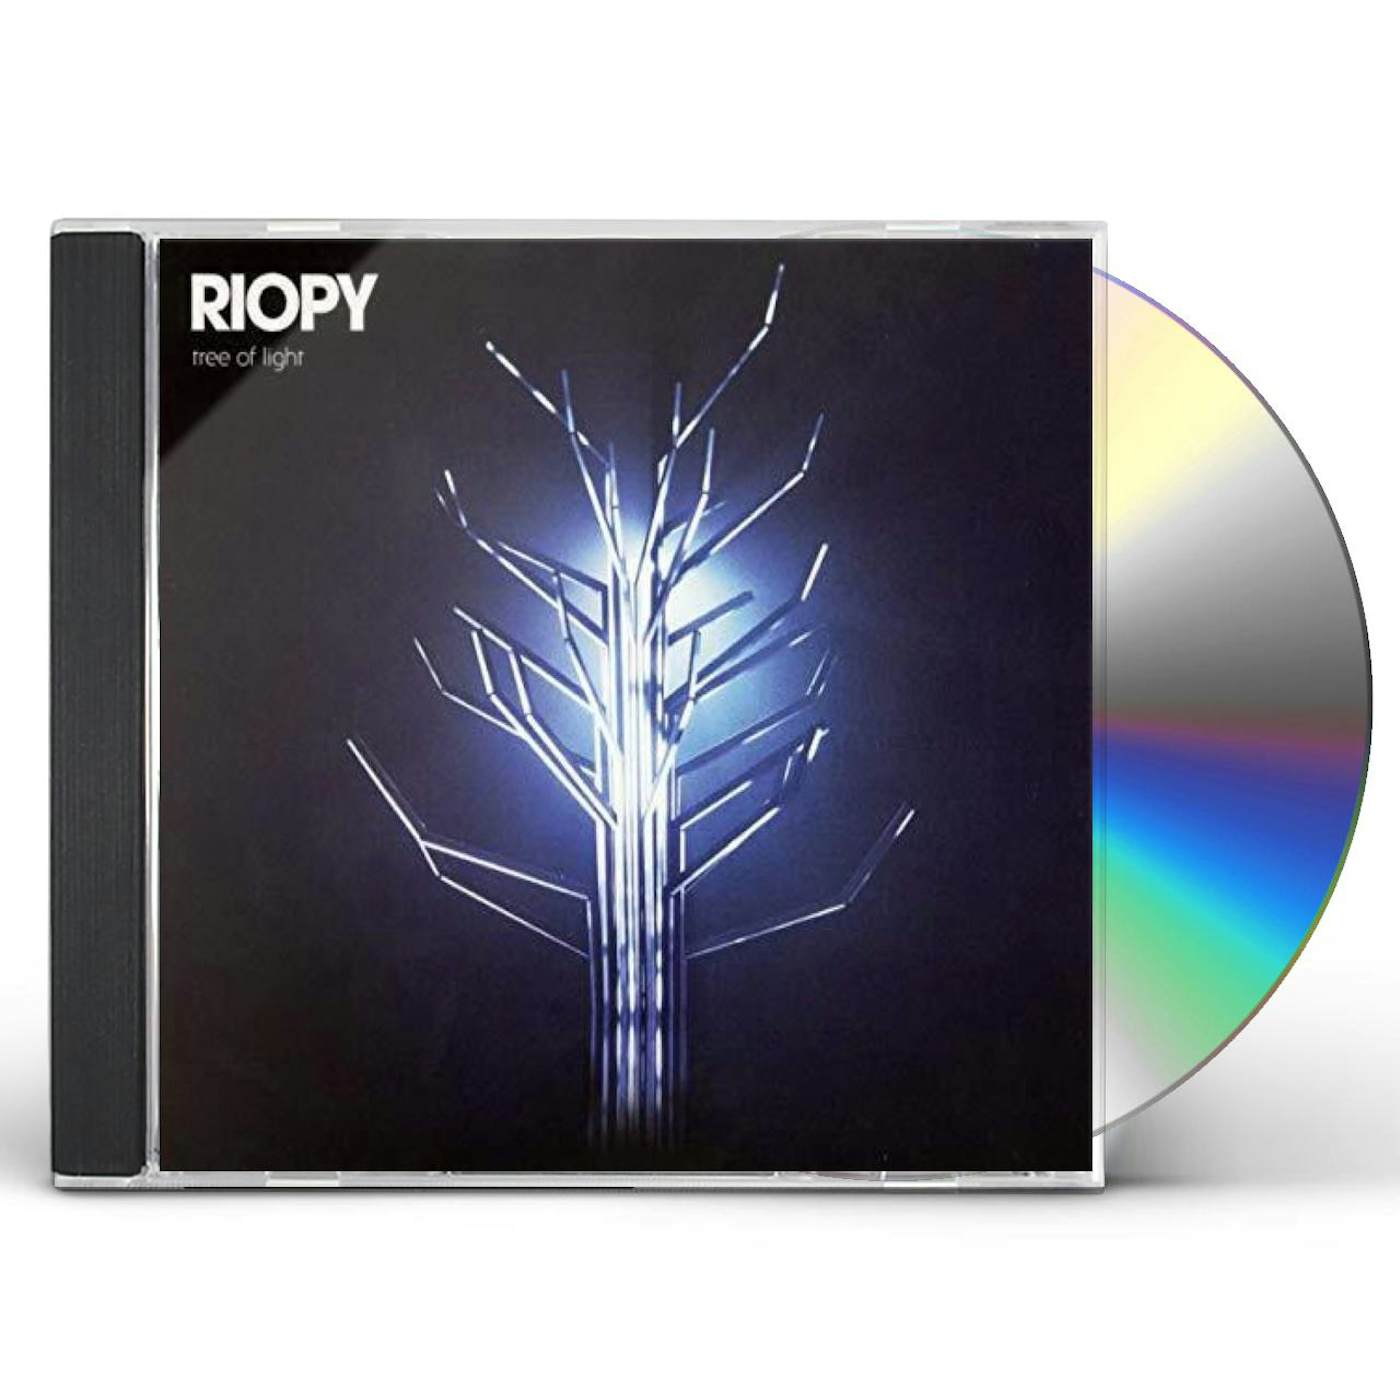 RIOPY TREE OF LIGHT CD